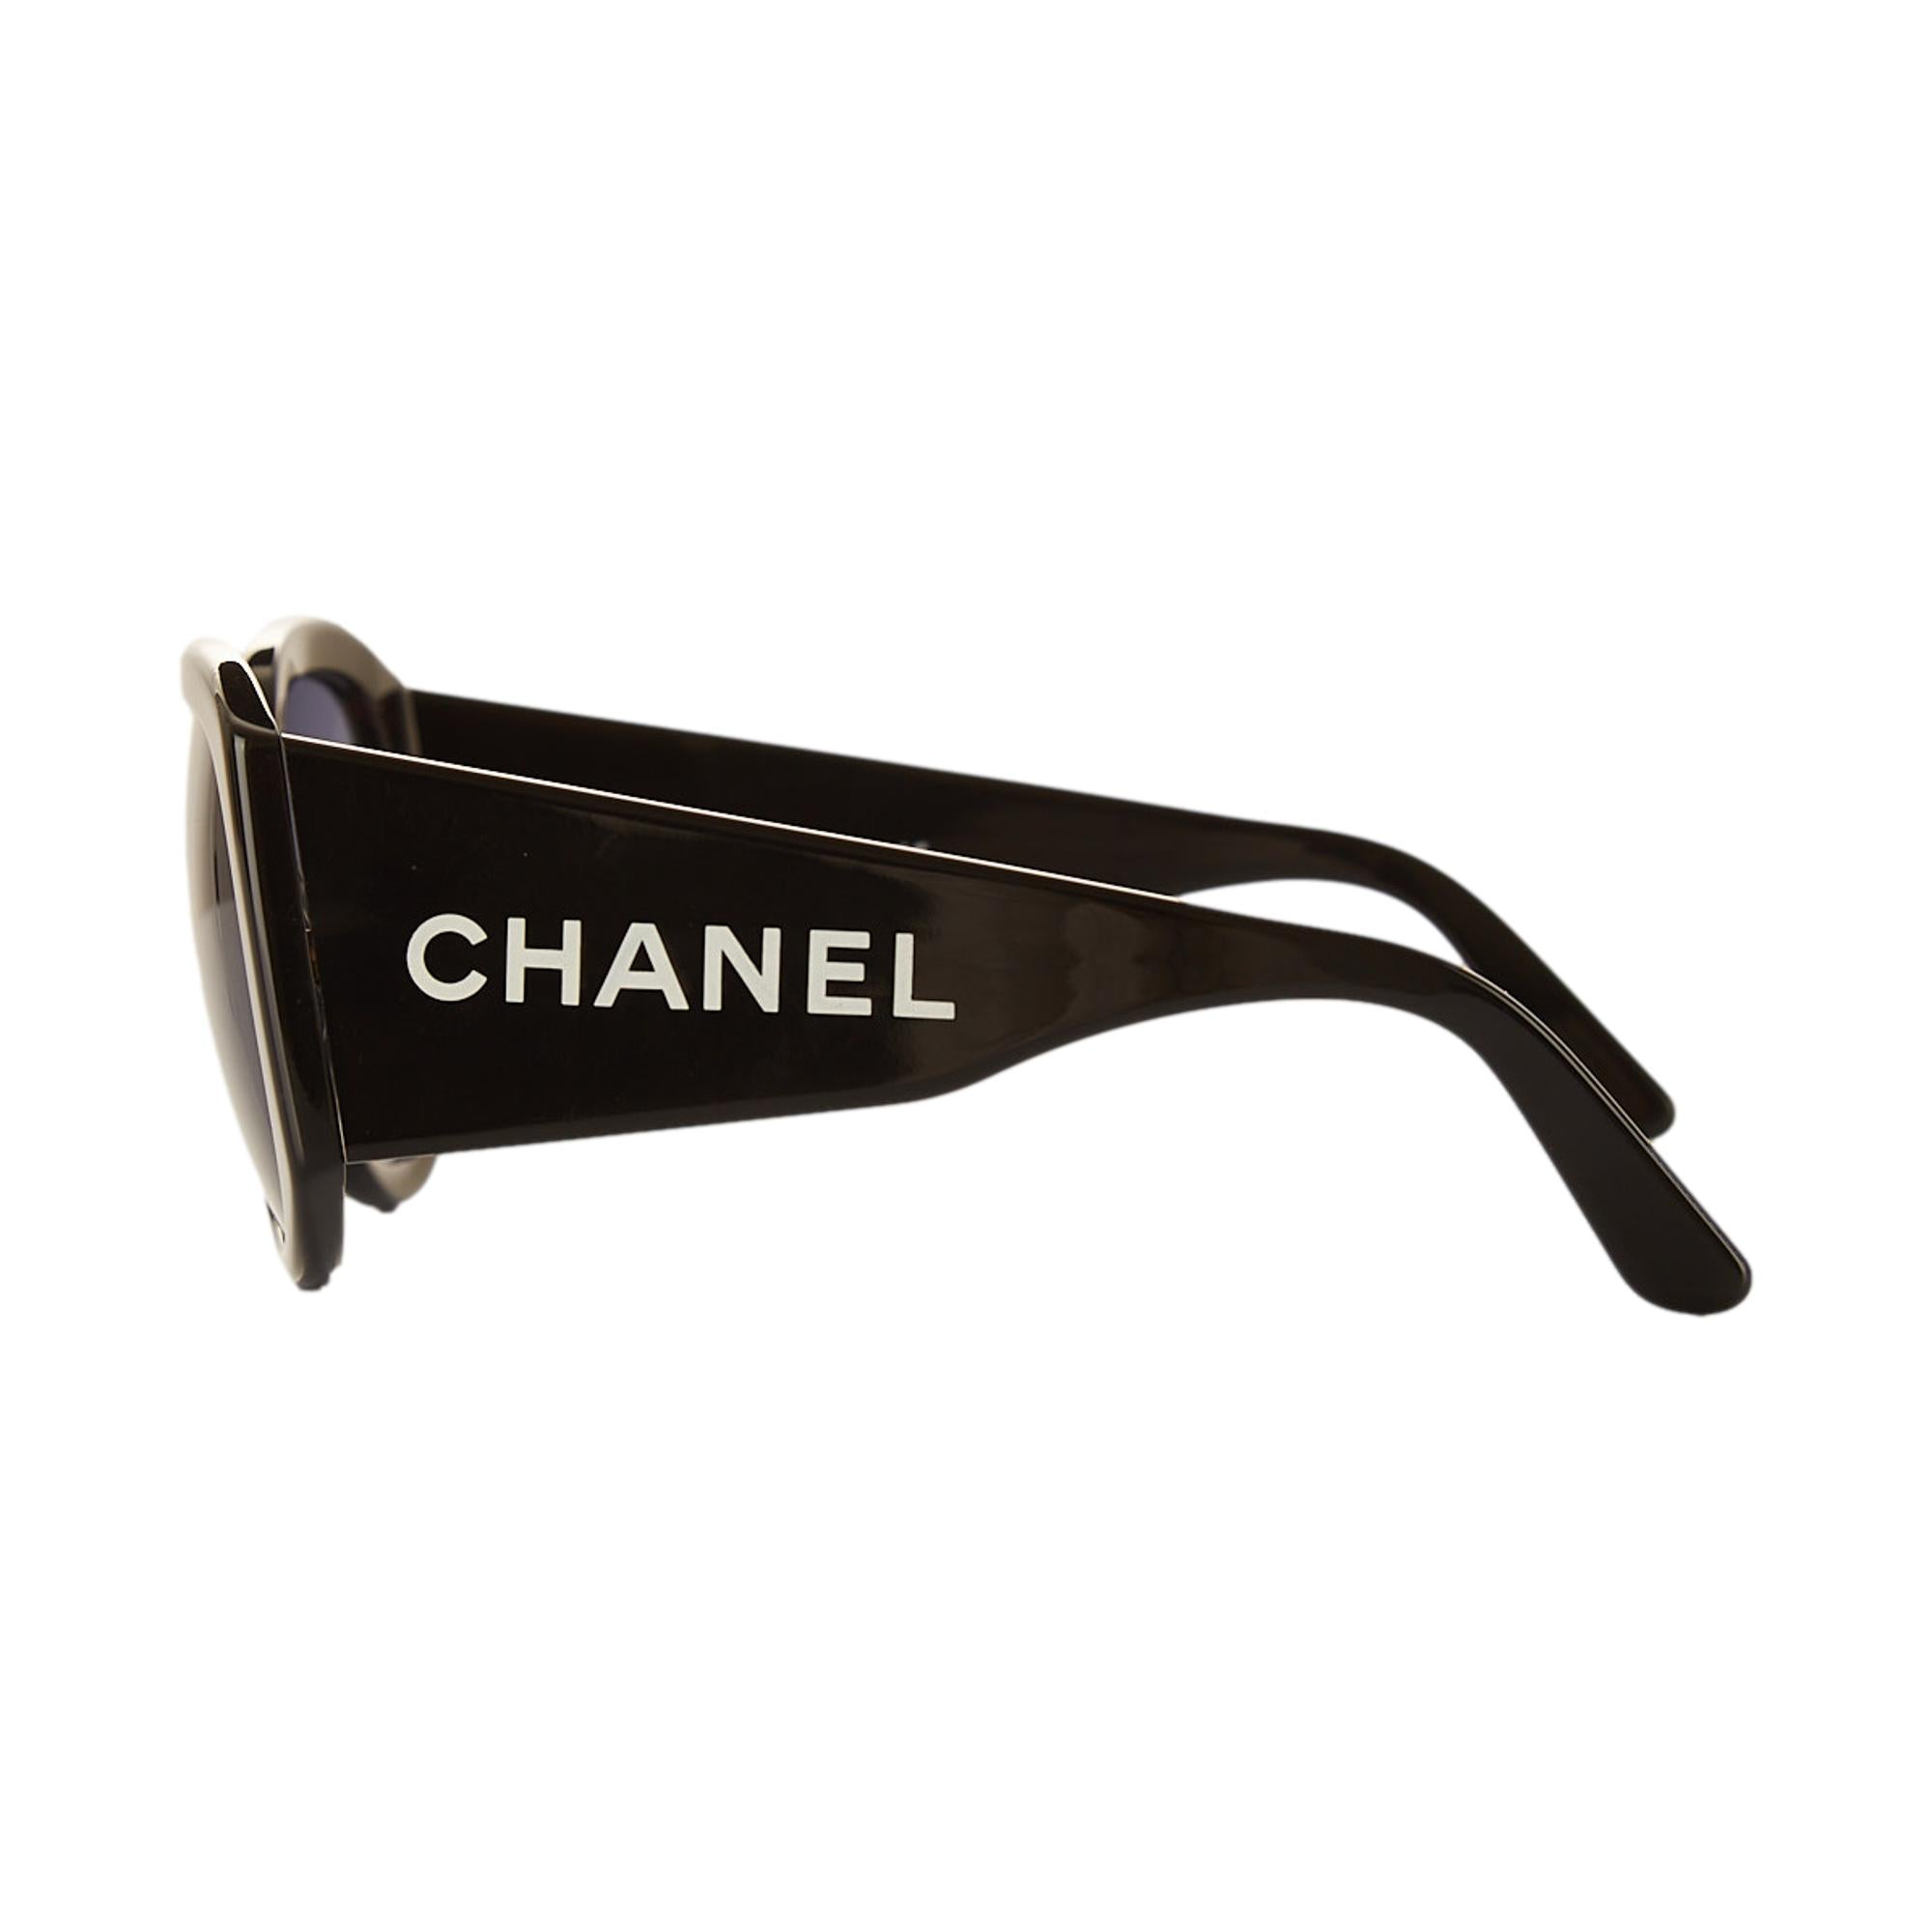 Chanel Black Logo Jumbo Sunglasses